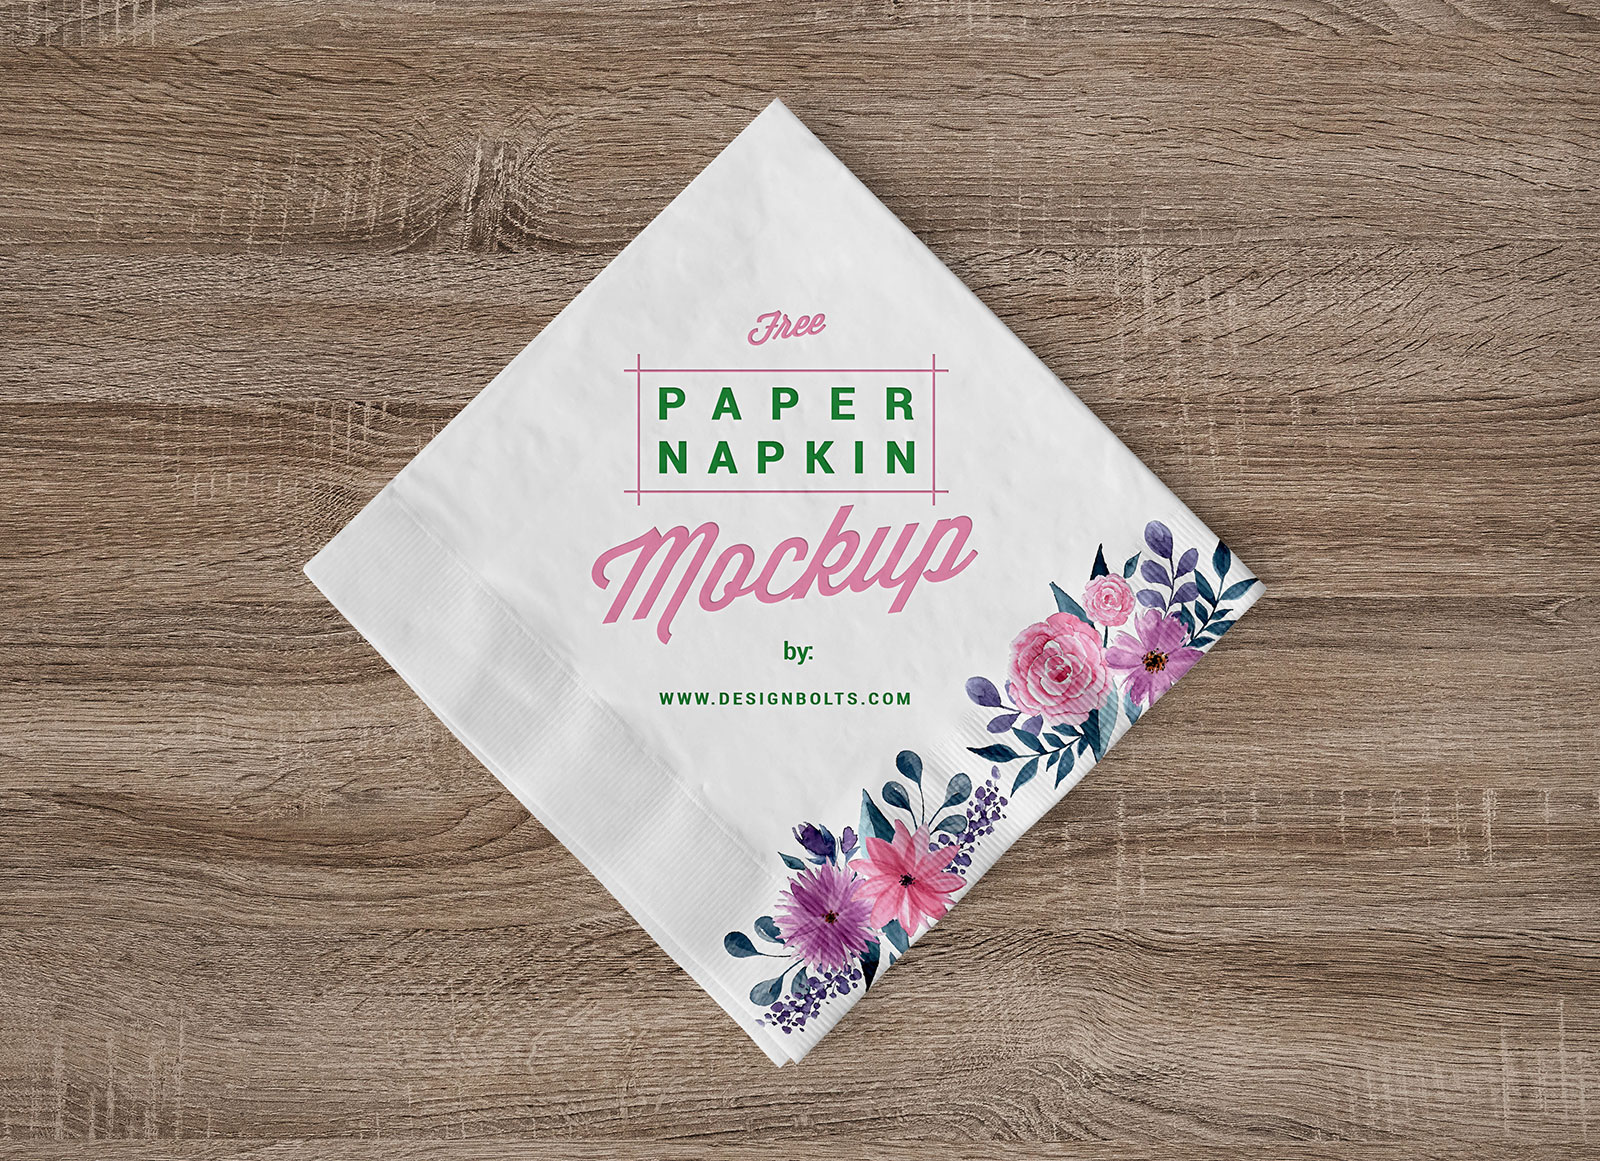 Free-Table-Paper-Napkin-Mockup-PSD